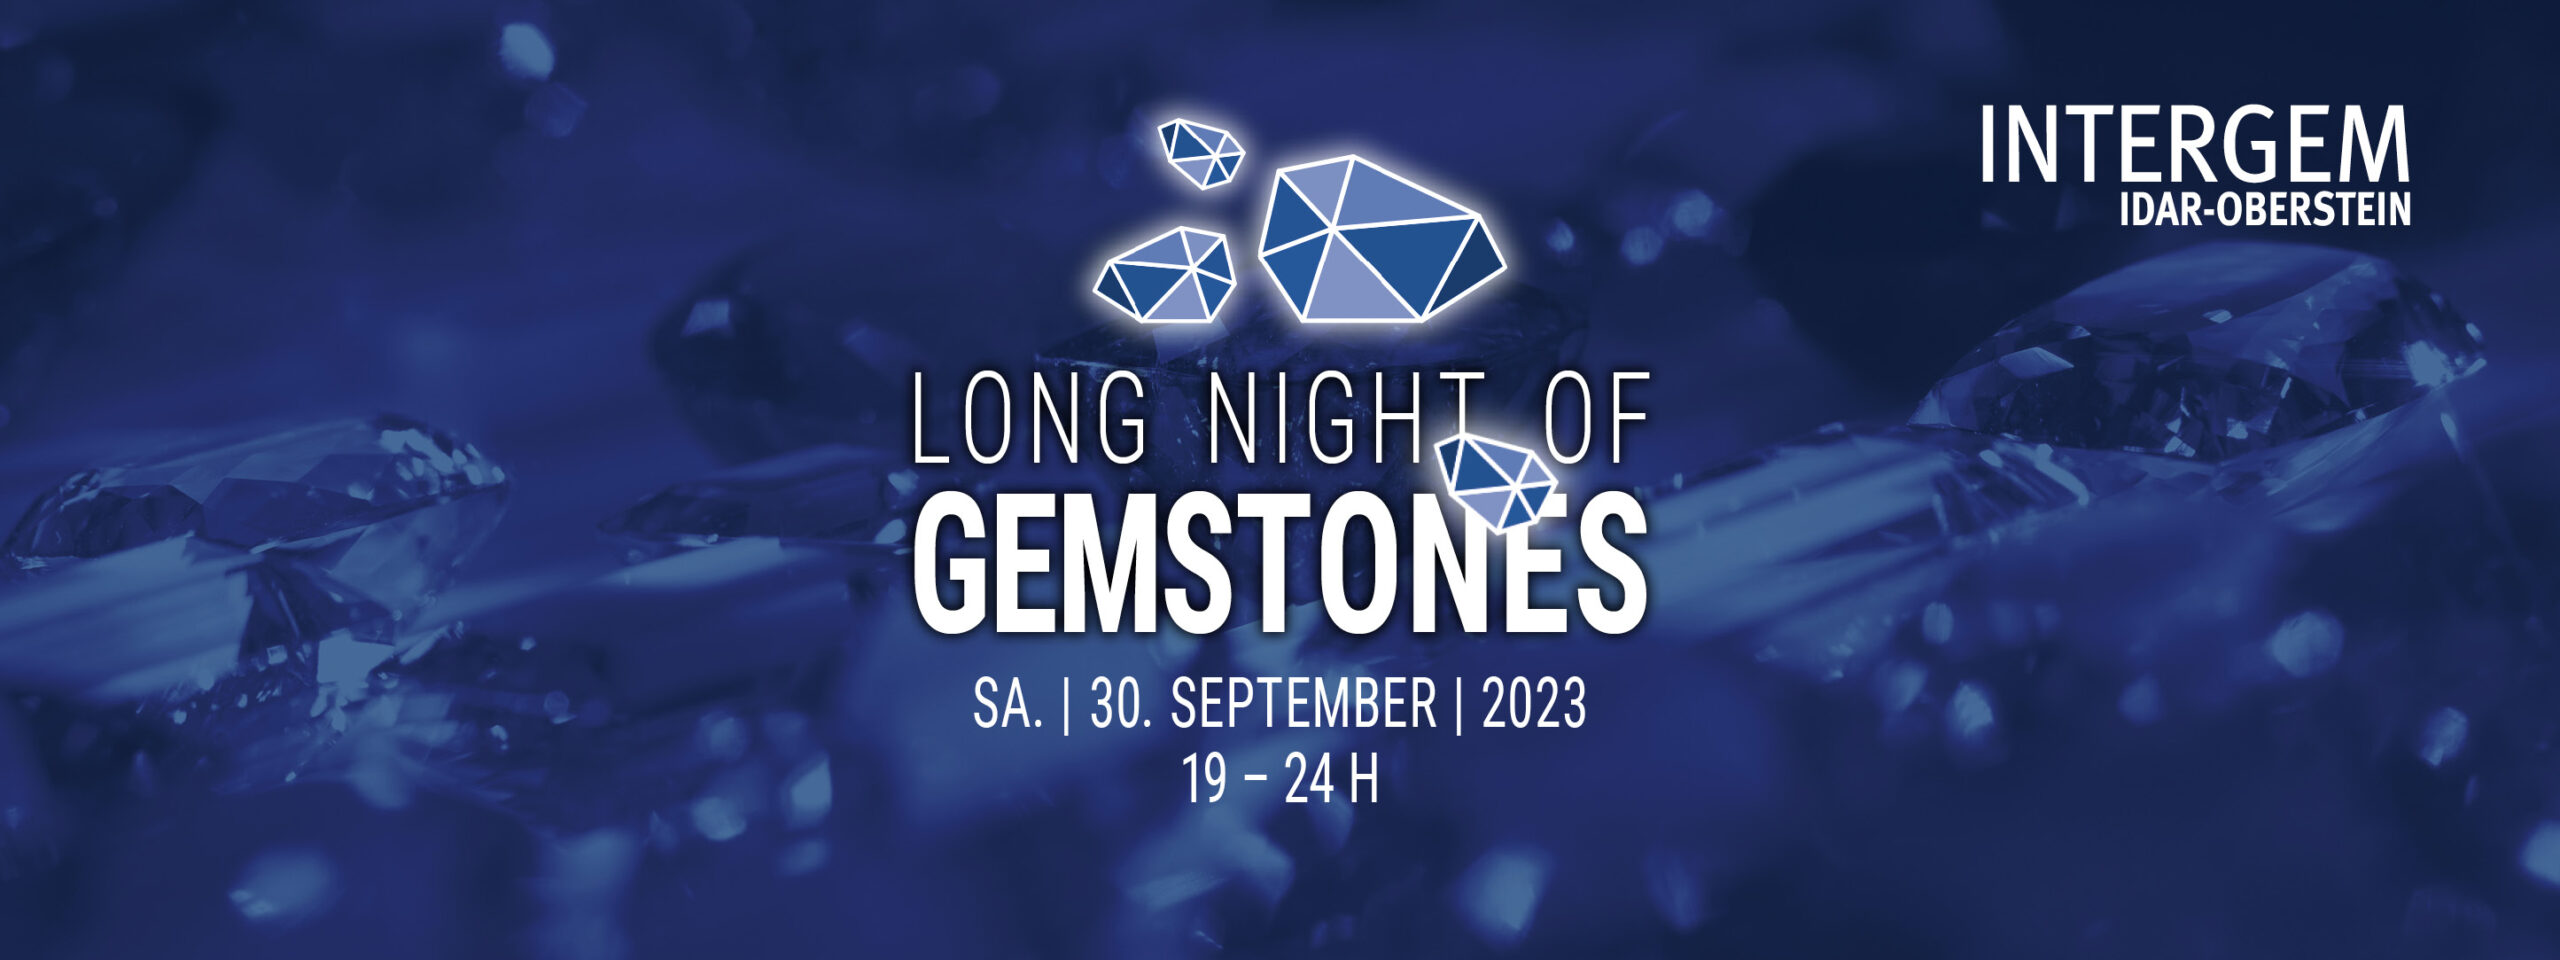 Long Night of Gemstones - Idar-Oberstein